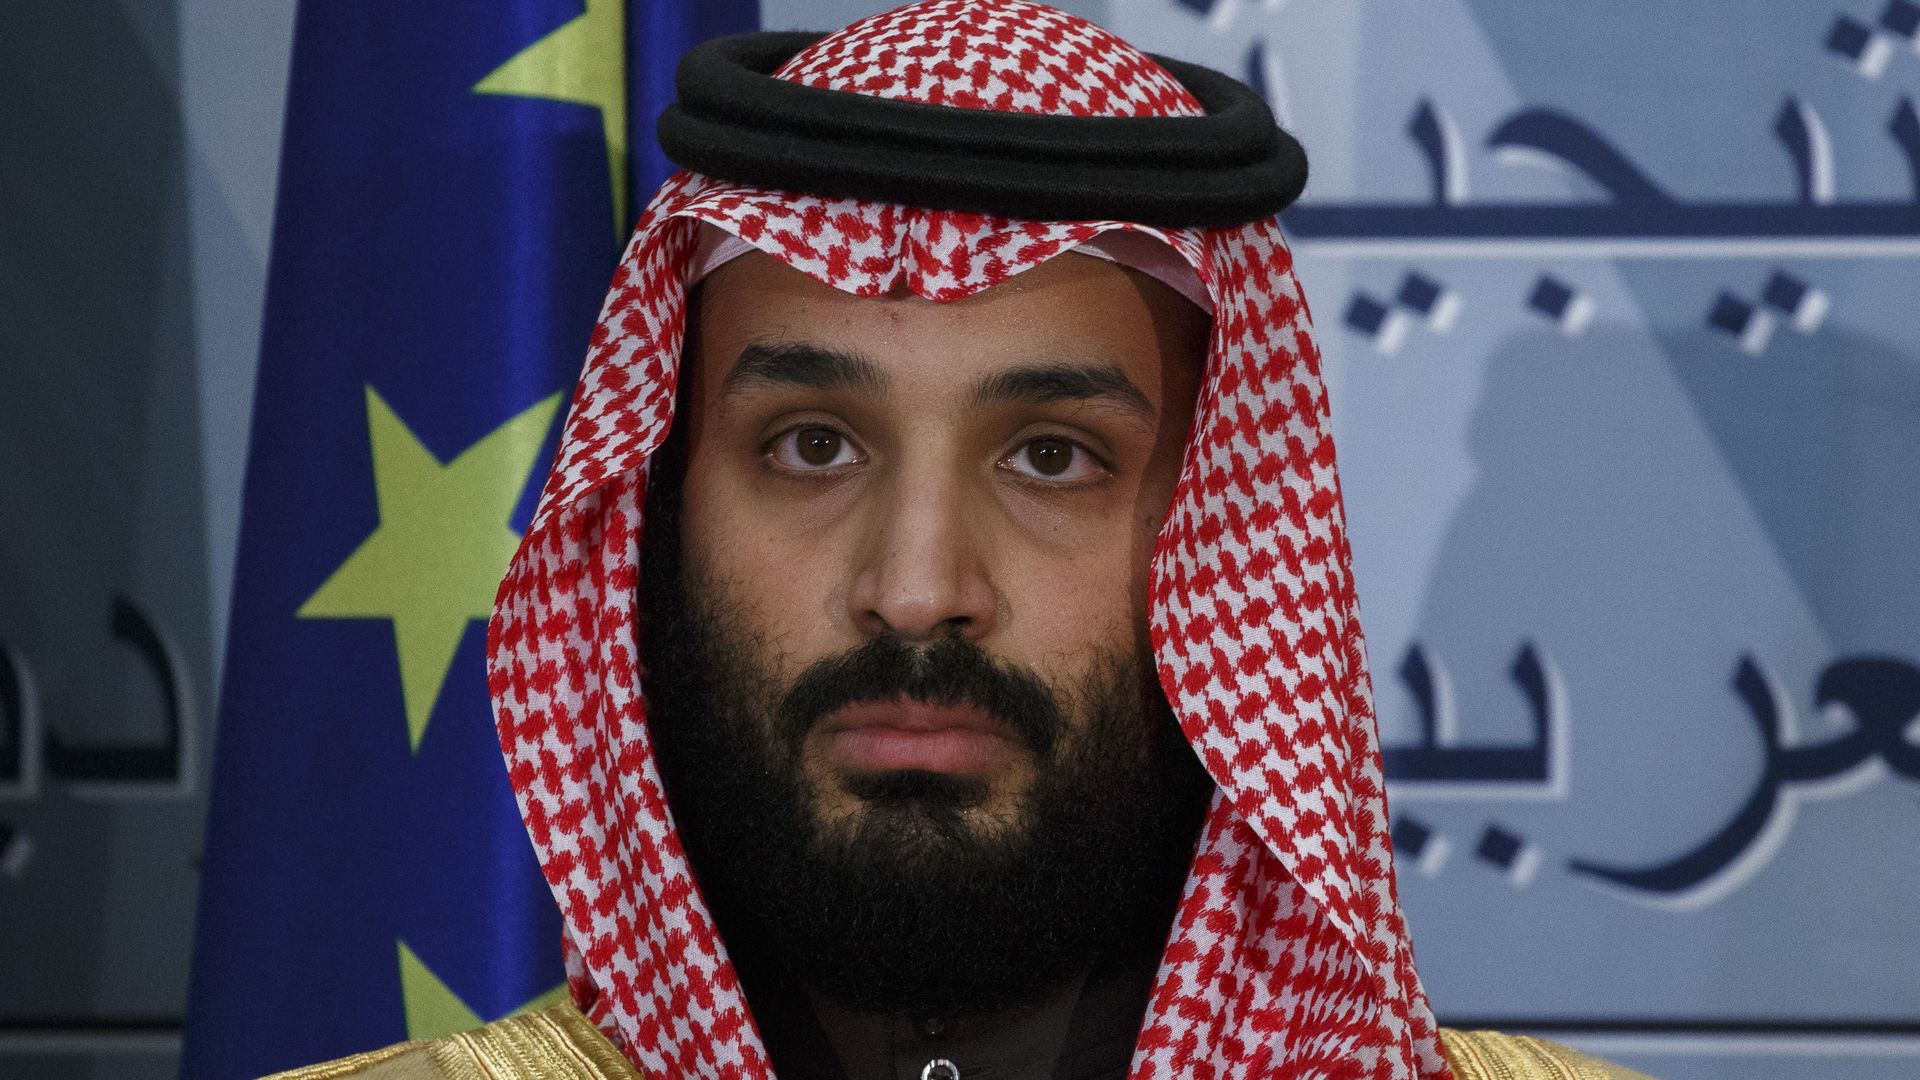 Saudi Arabia Crown Prince Mohammed bin Salman looks on during a ceremony